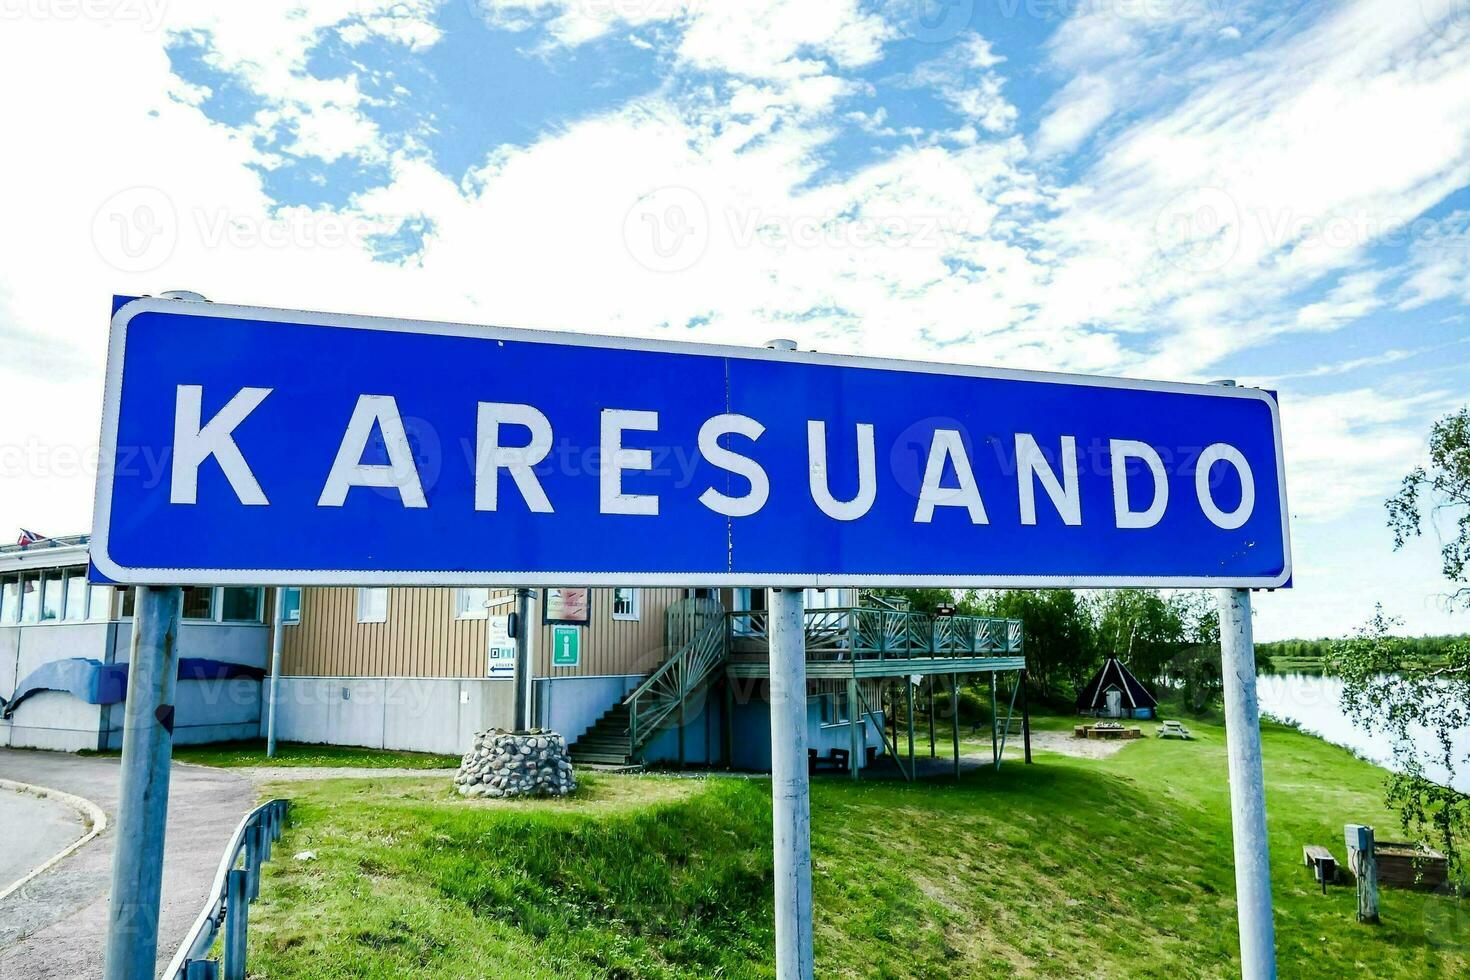 karesuando, Finlande - juillet 2019 photo